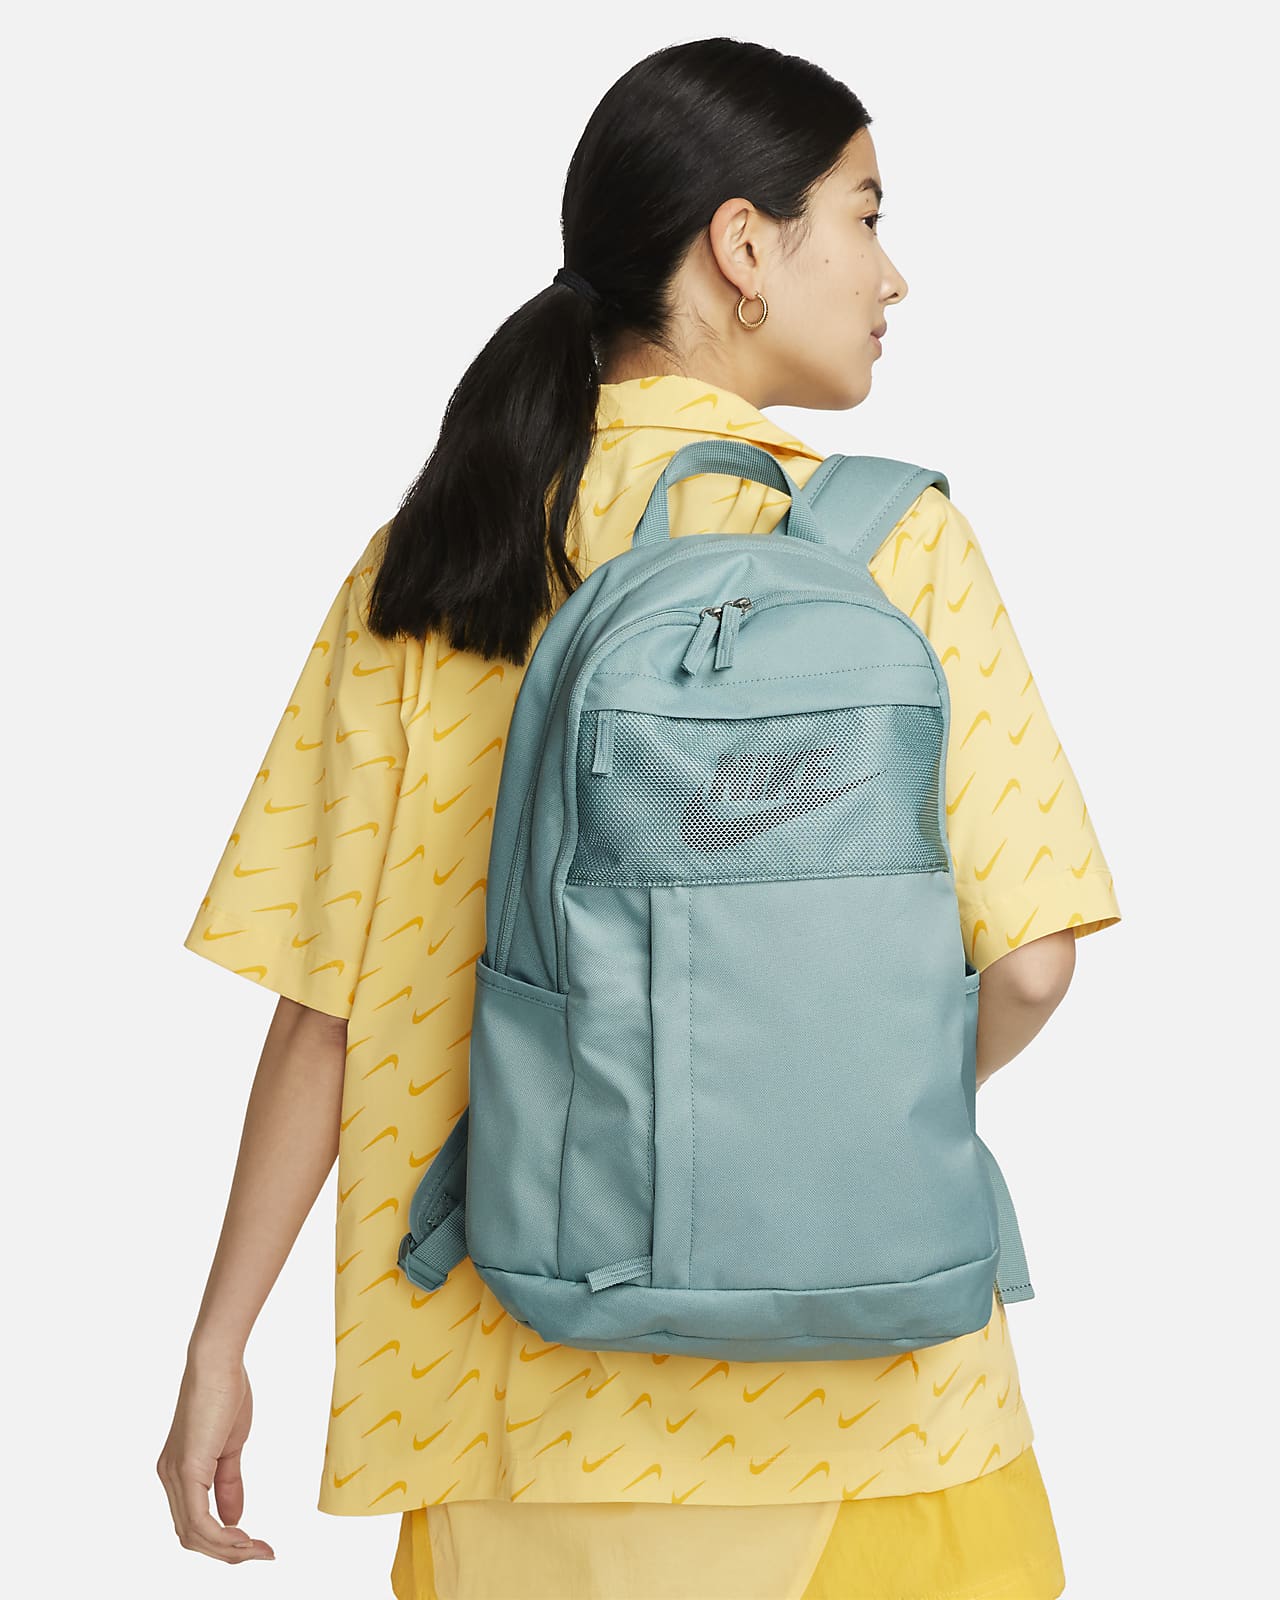 Durable Large Volume Bookbag, School Bag, Travel Bag, PVC Bag See